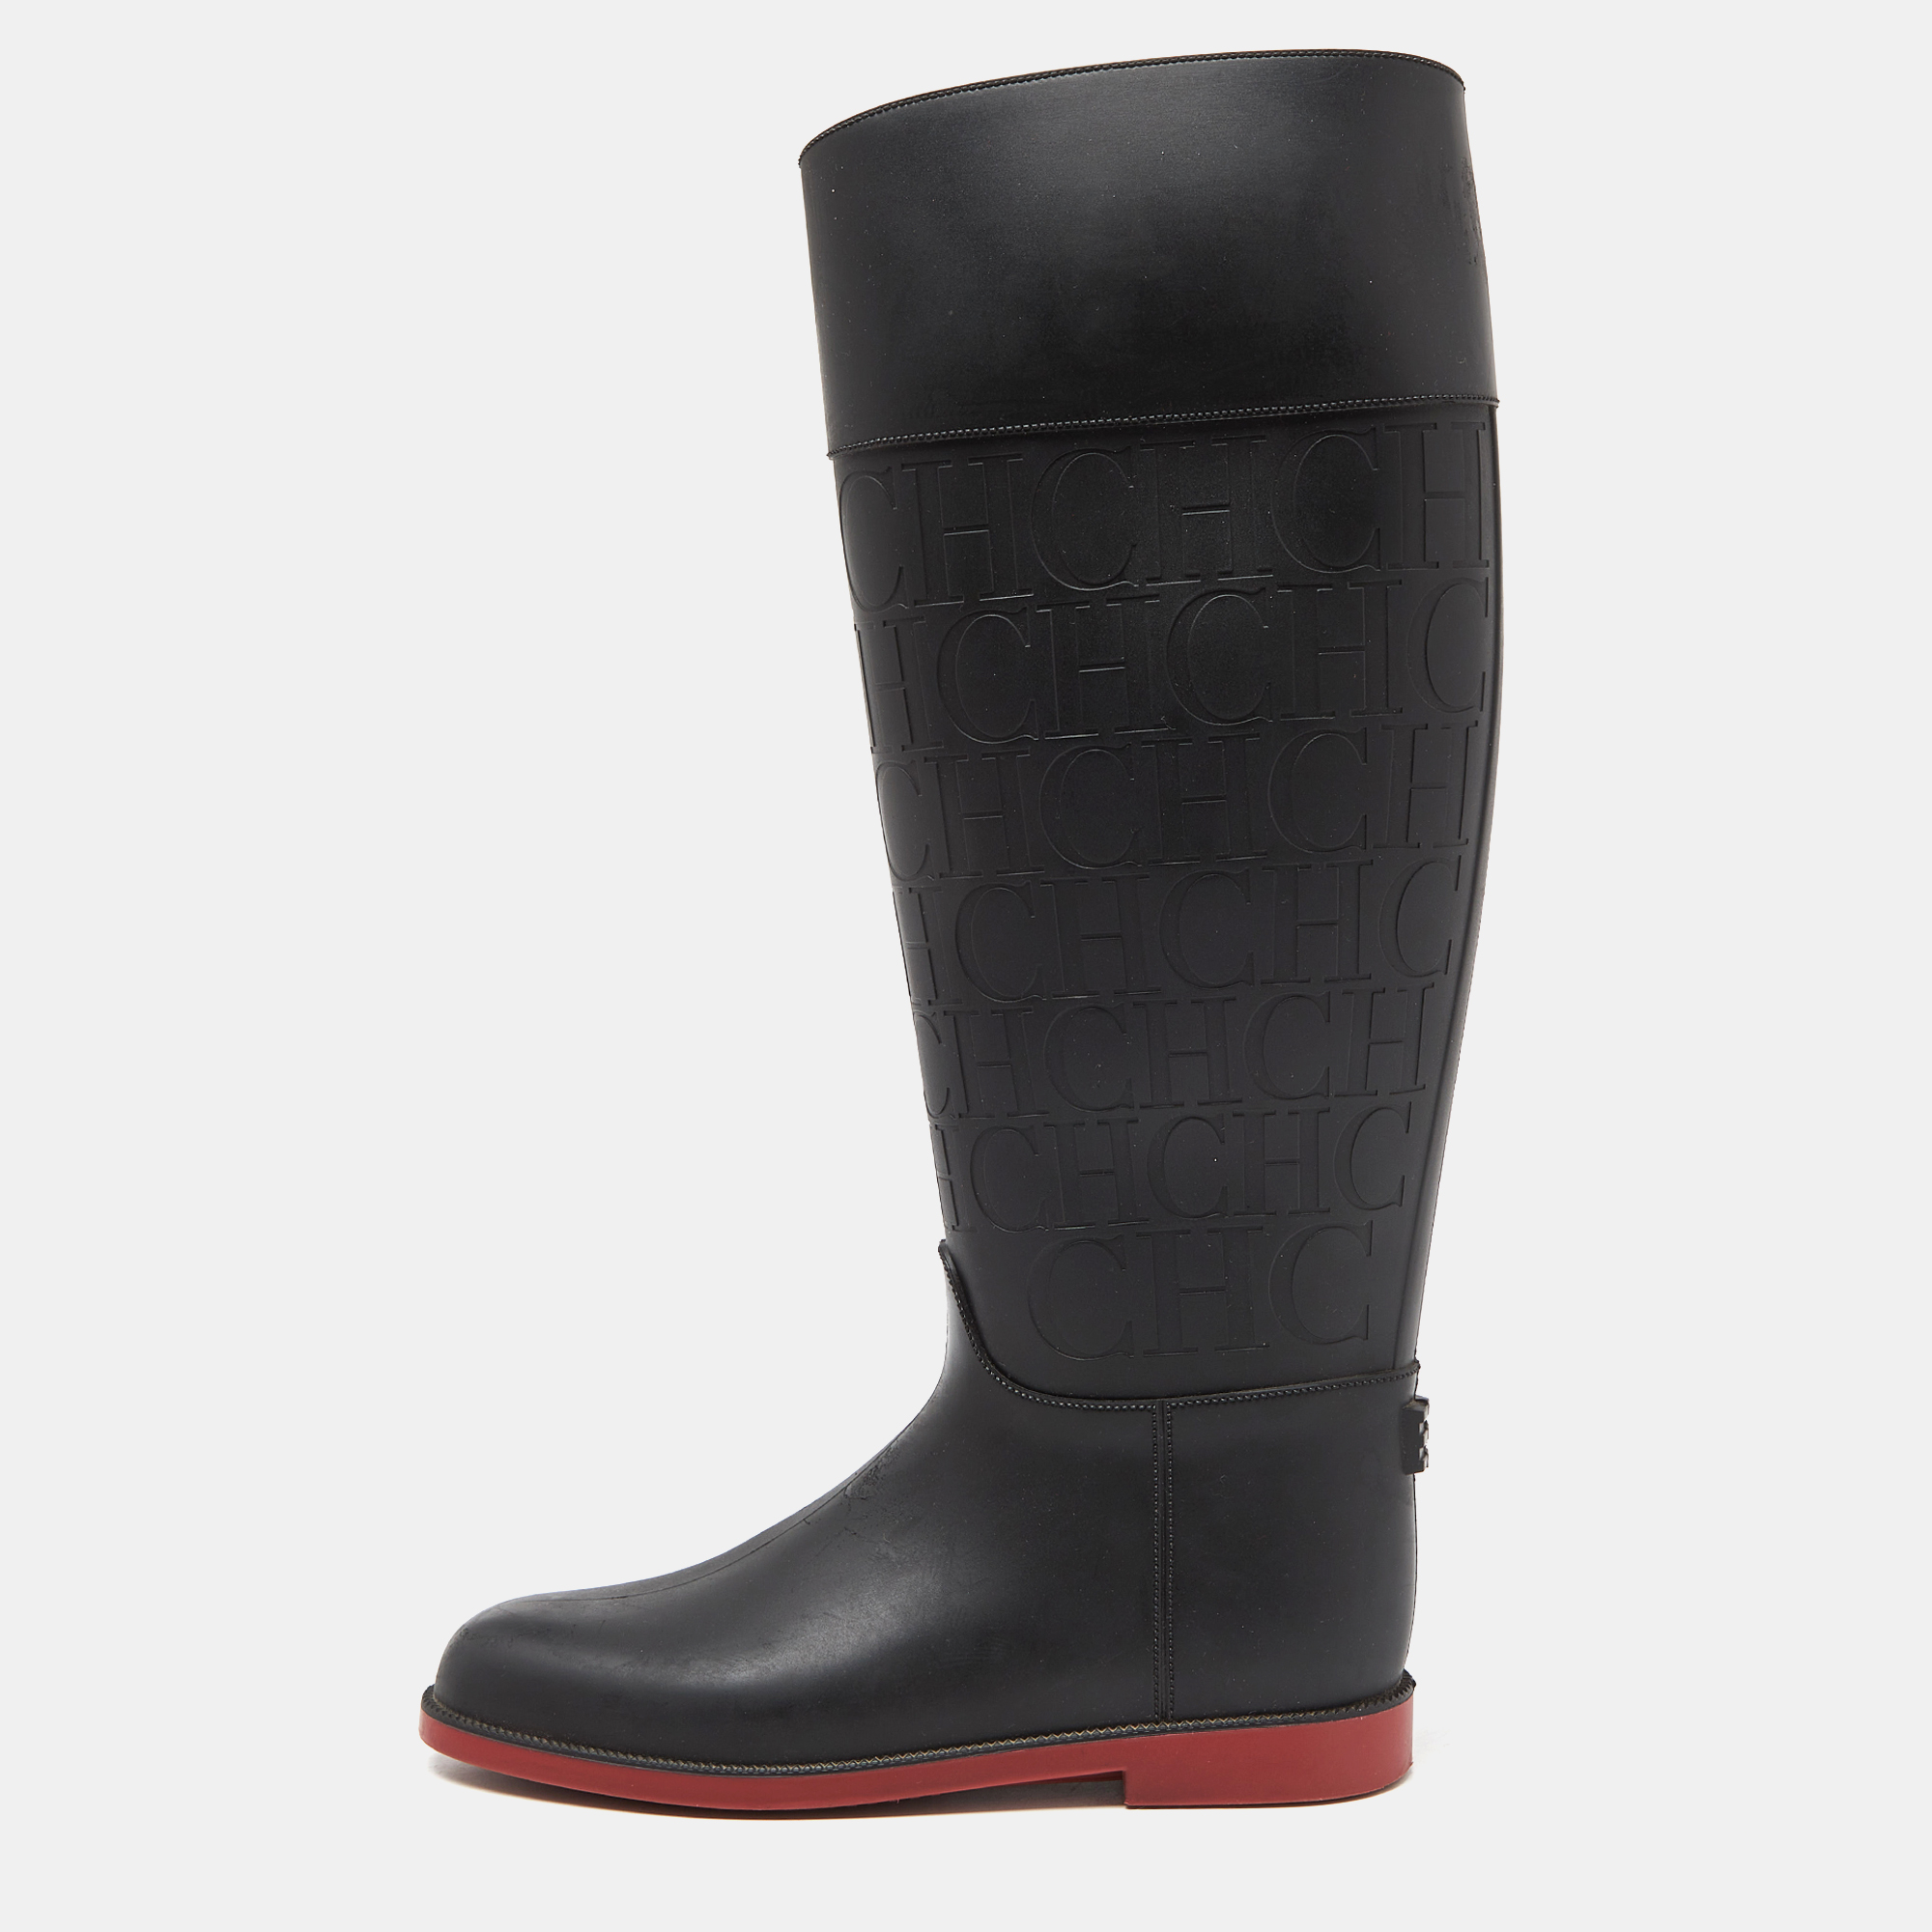 Ch carolina herrera black embossed rubber rain boots size 38